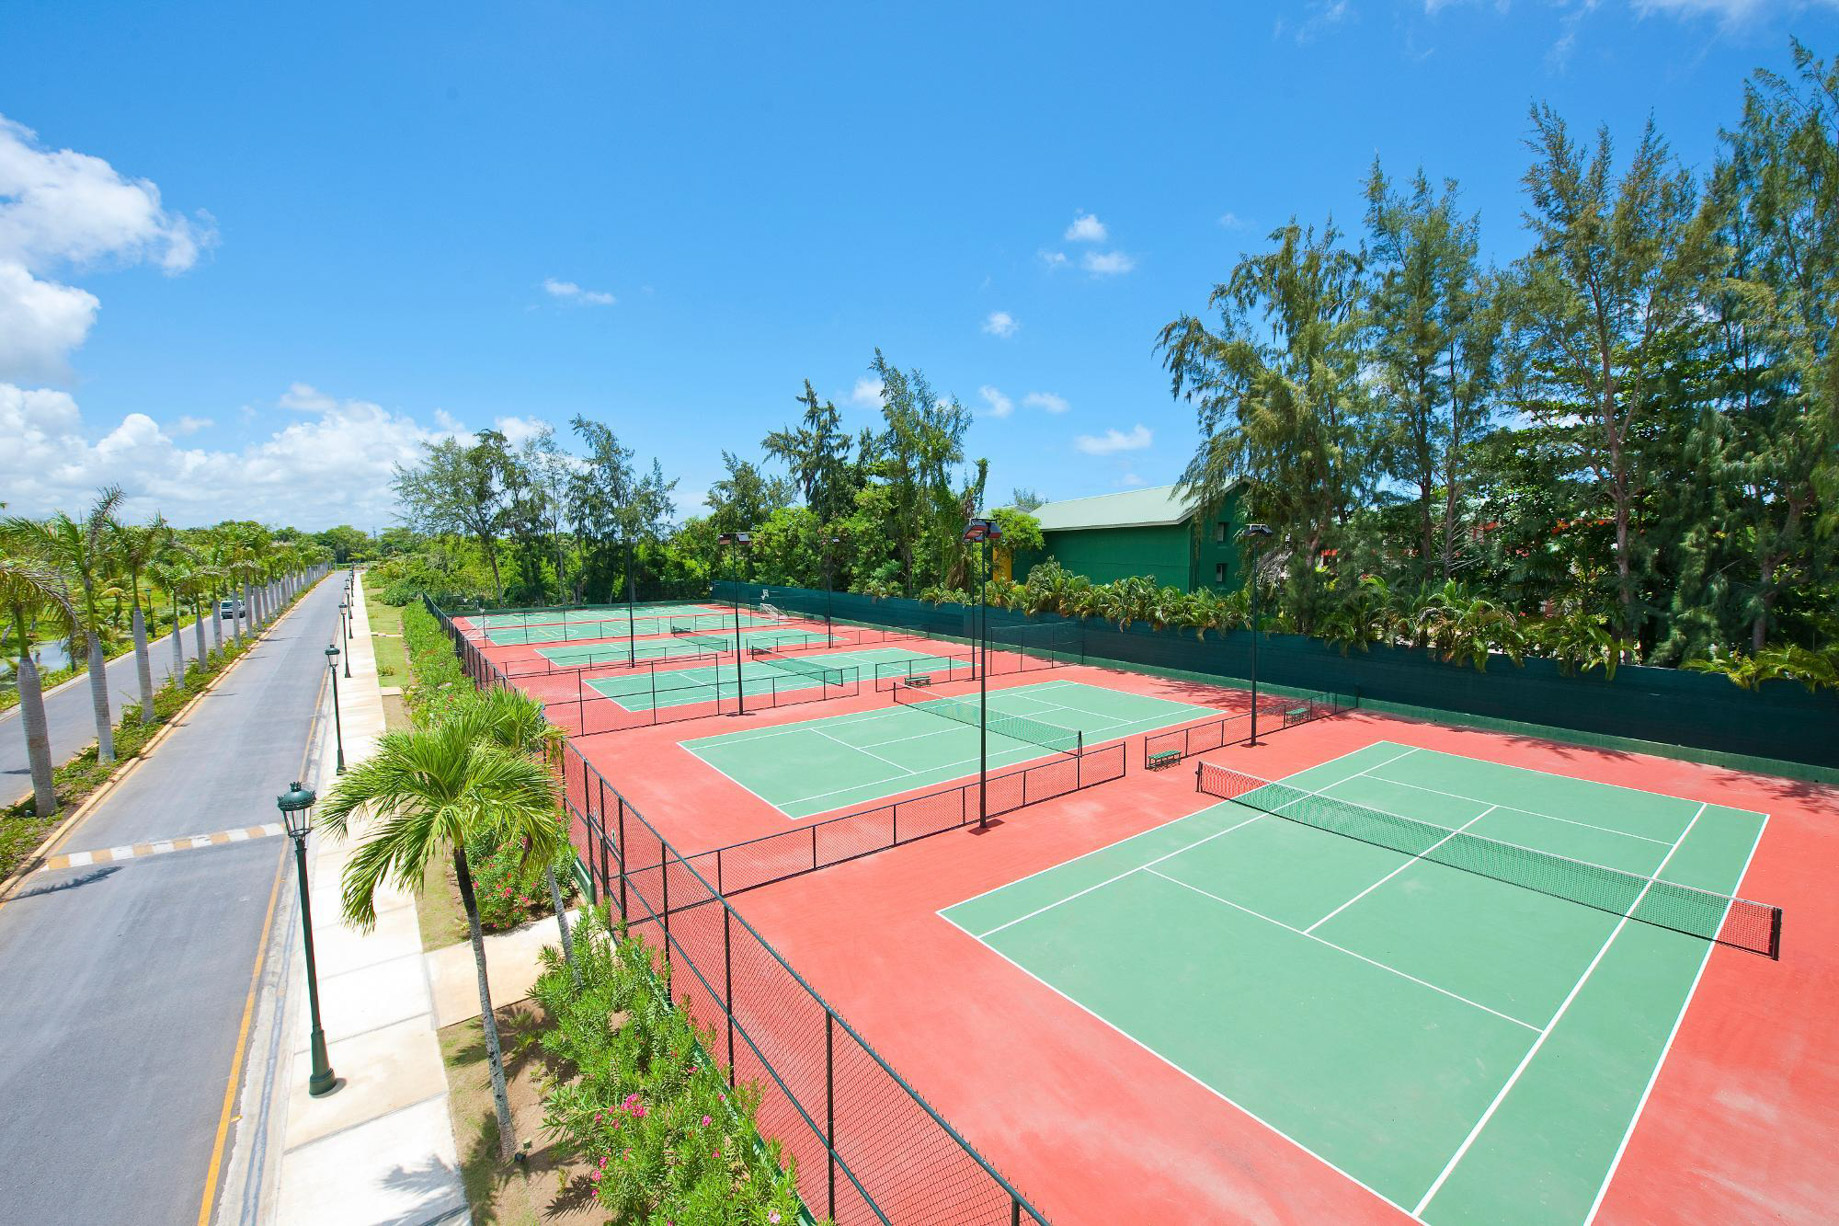 Barceló Bávaro Beach Hotel Grand Resort – Punta Cana, Dominican Republic – Tennis